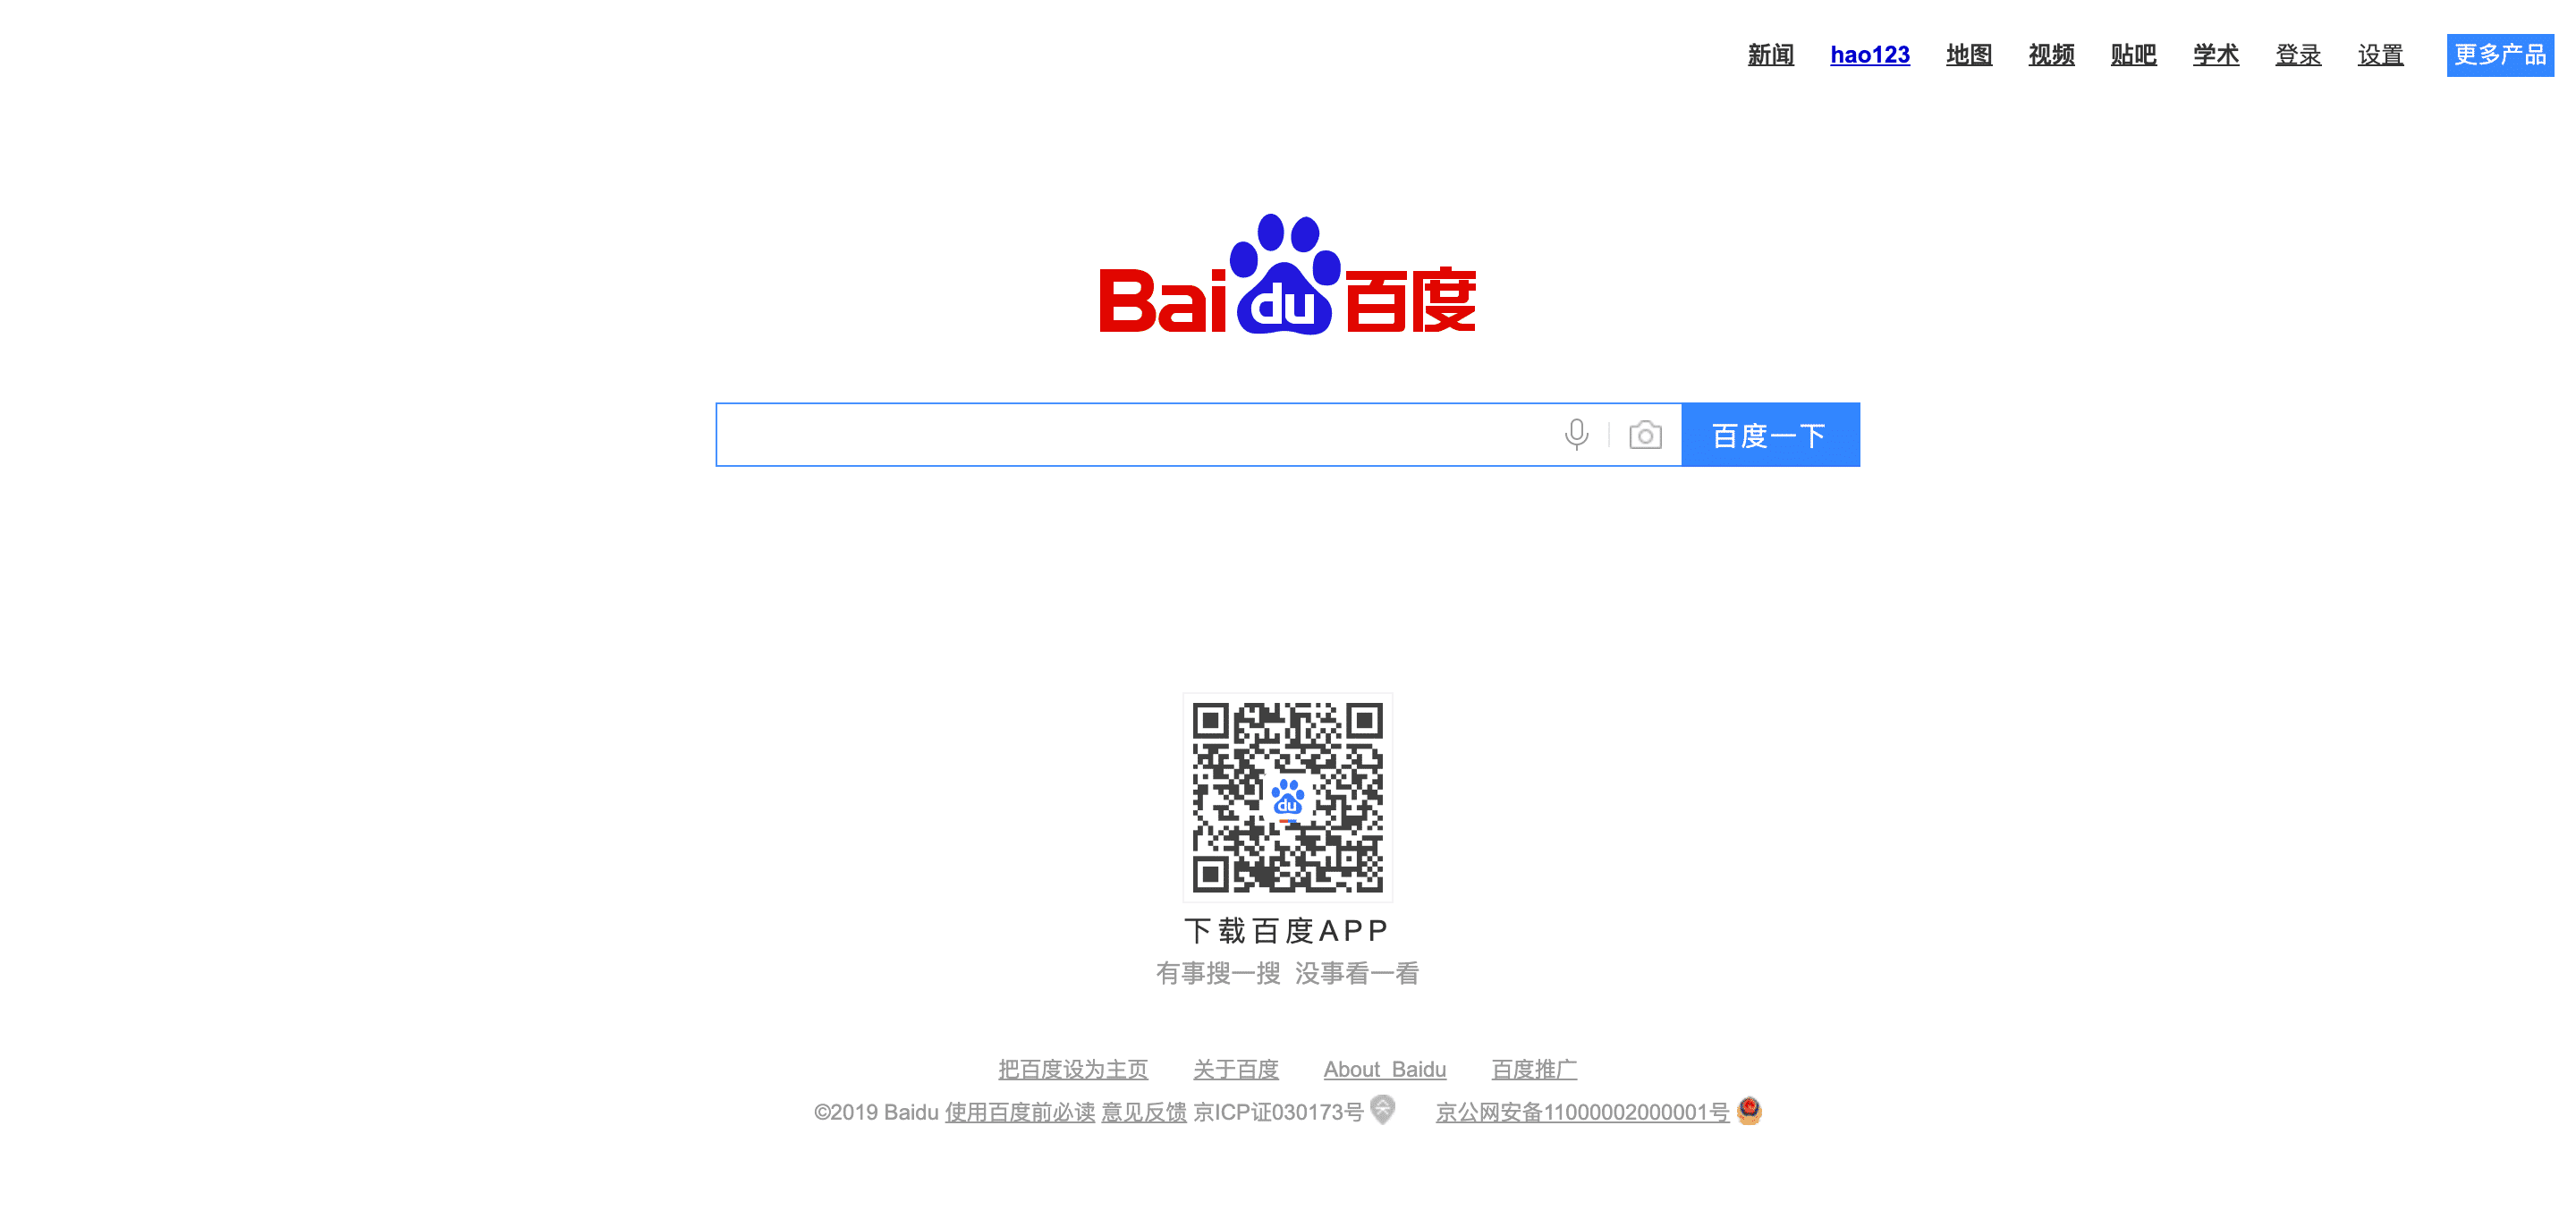 Alternative search engines: Baidu